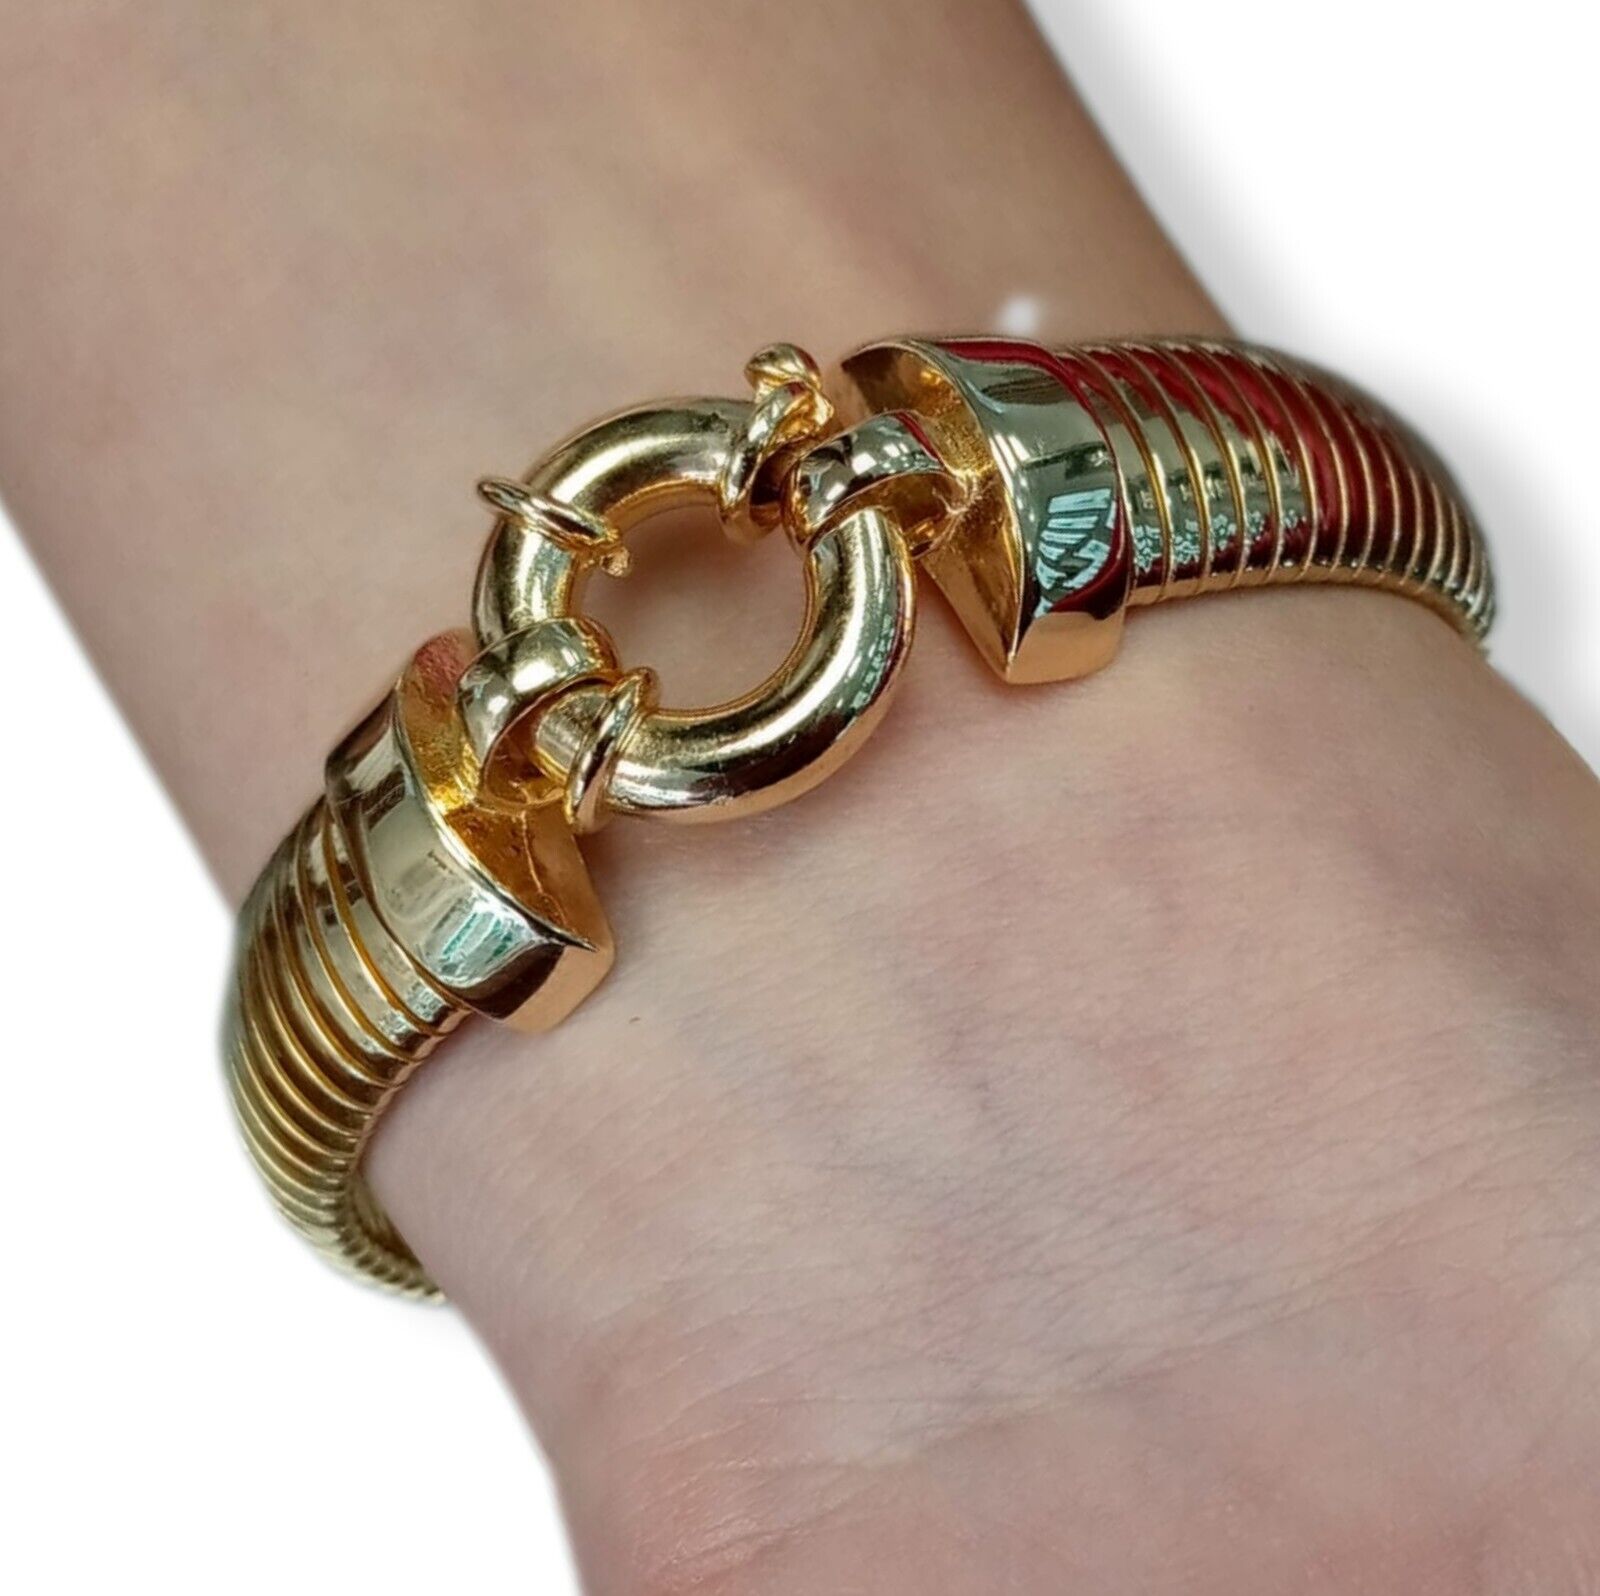 Omega Armband Schlangenarmband 925 Silber vergoldet massiv mit runder Schnalle